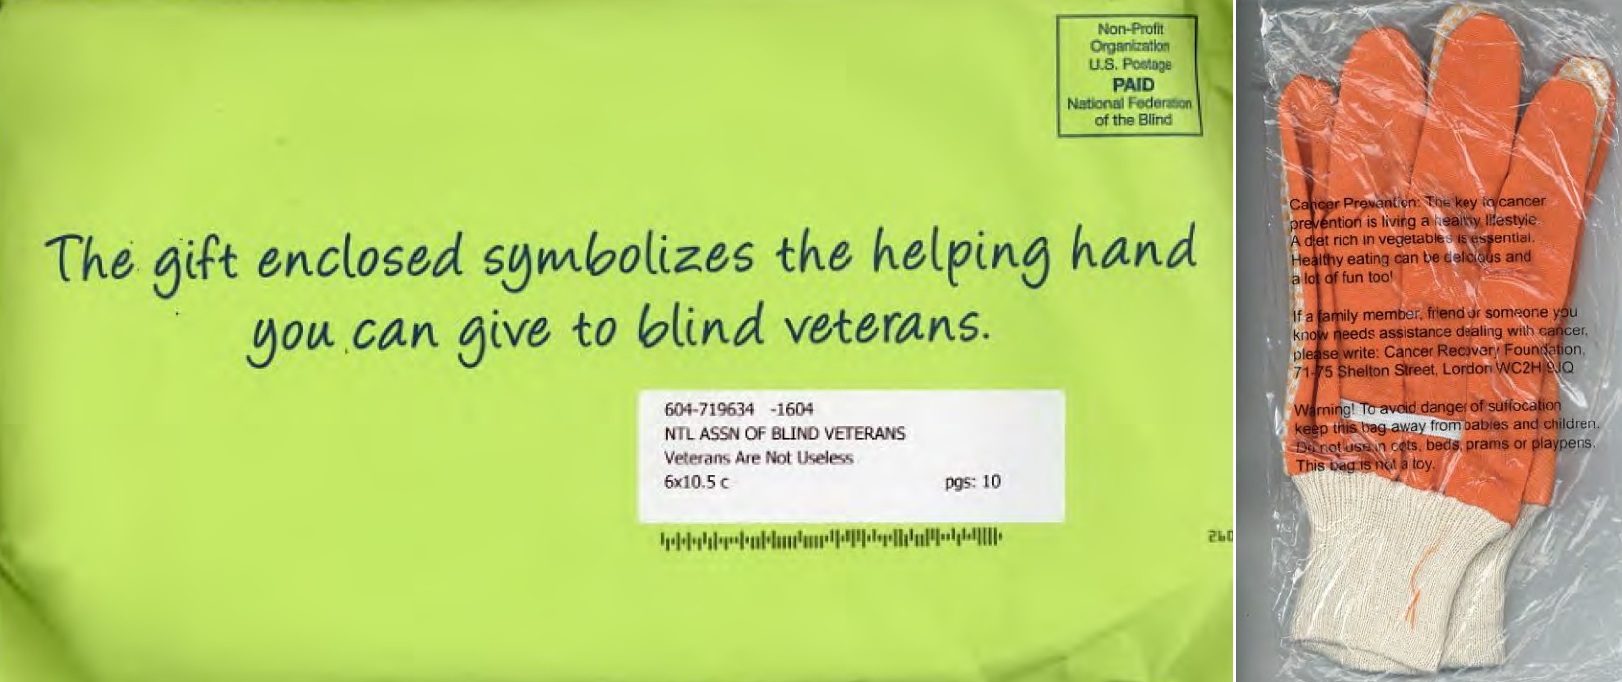 National Association of Blind Veterans direct mail